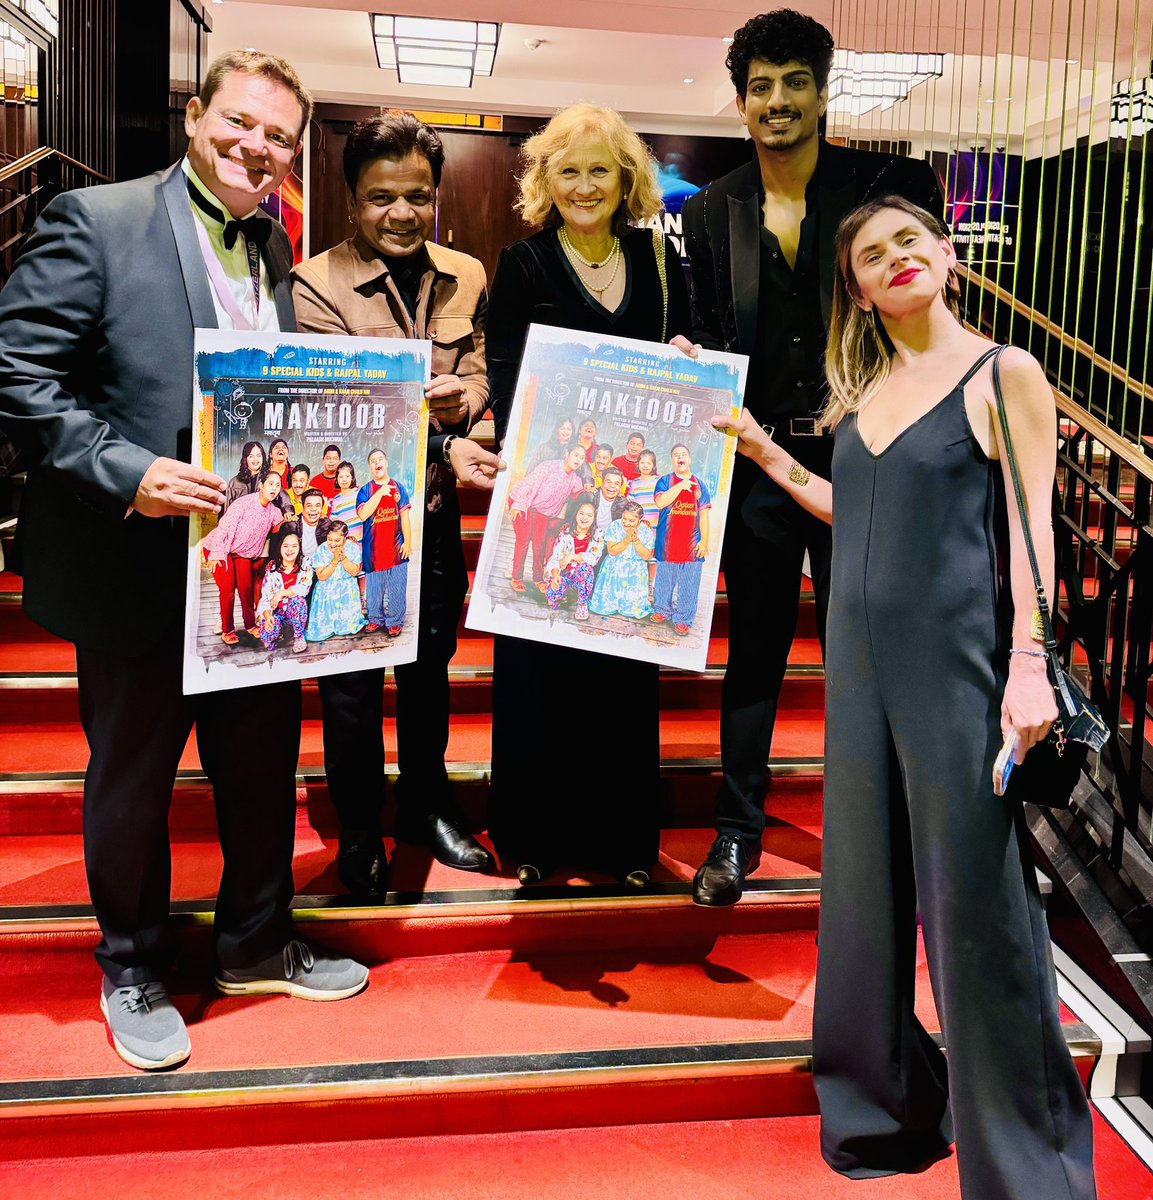 #RajpalYadav and #PalaashMuchhal unveil #Maktoob poster at #Cannes 

The film stars nine special children alongside Rajpal Yadav

@rajpalofficial @Palash_Muchhal